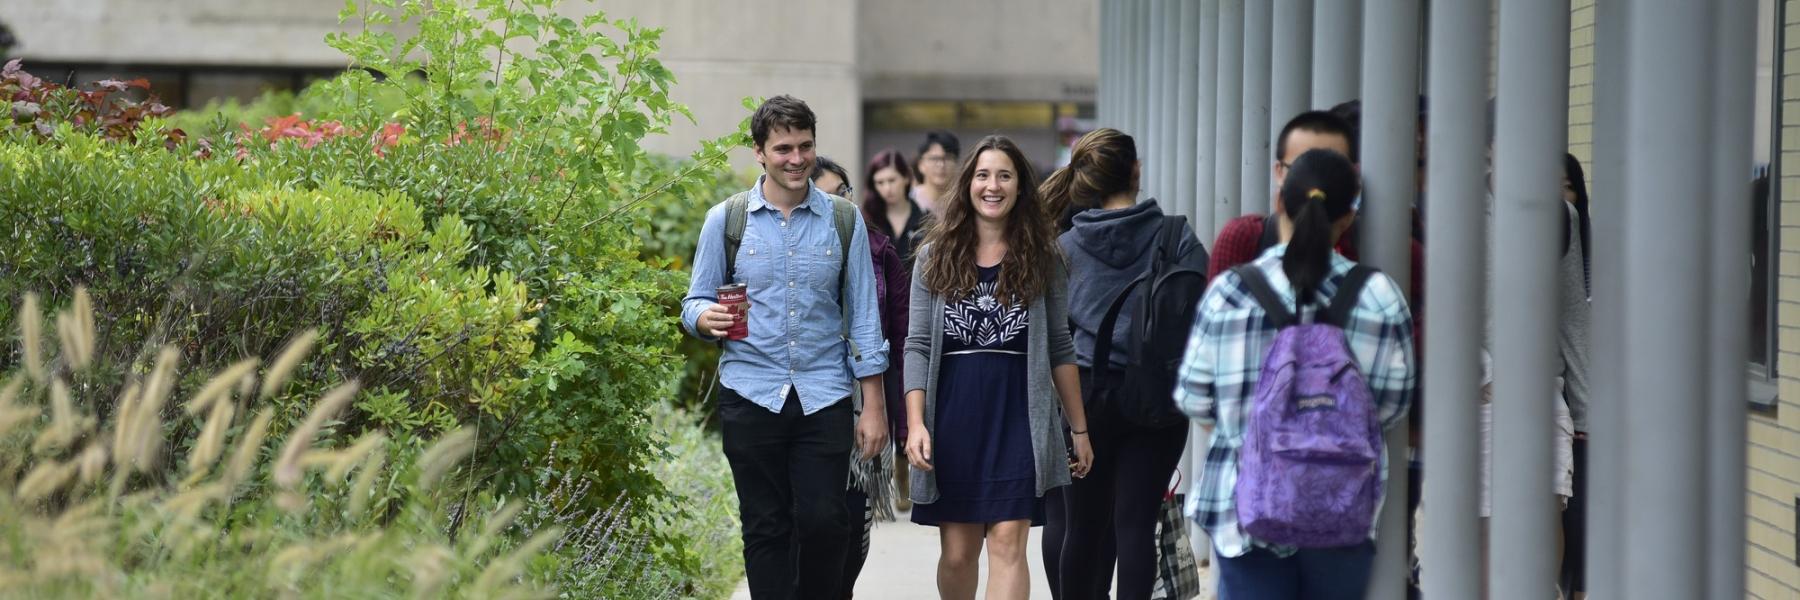 students walking otuside on campus